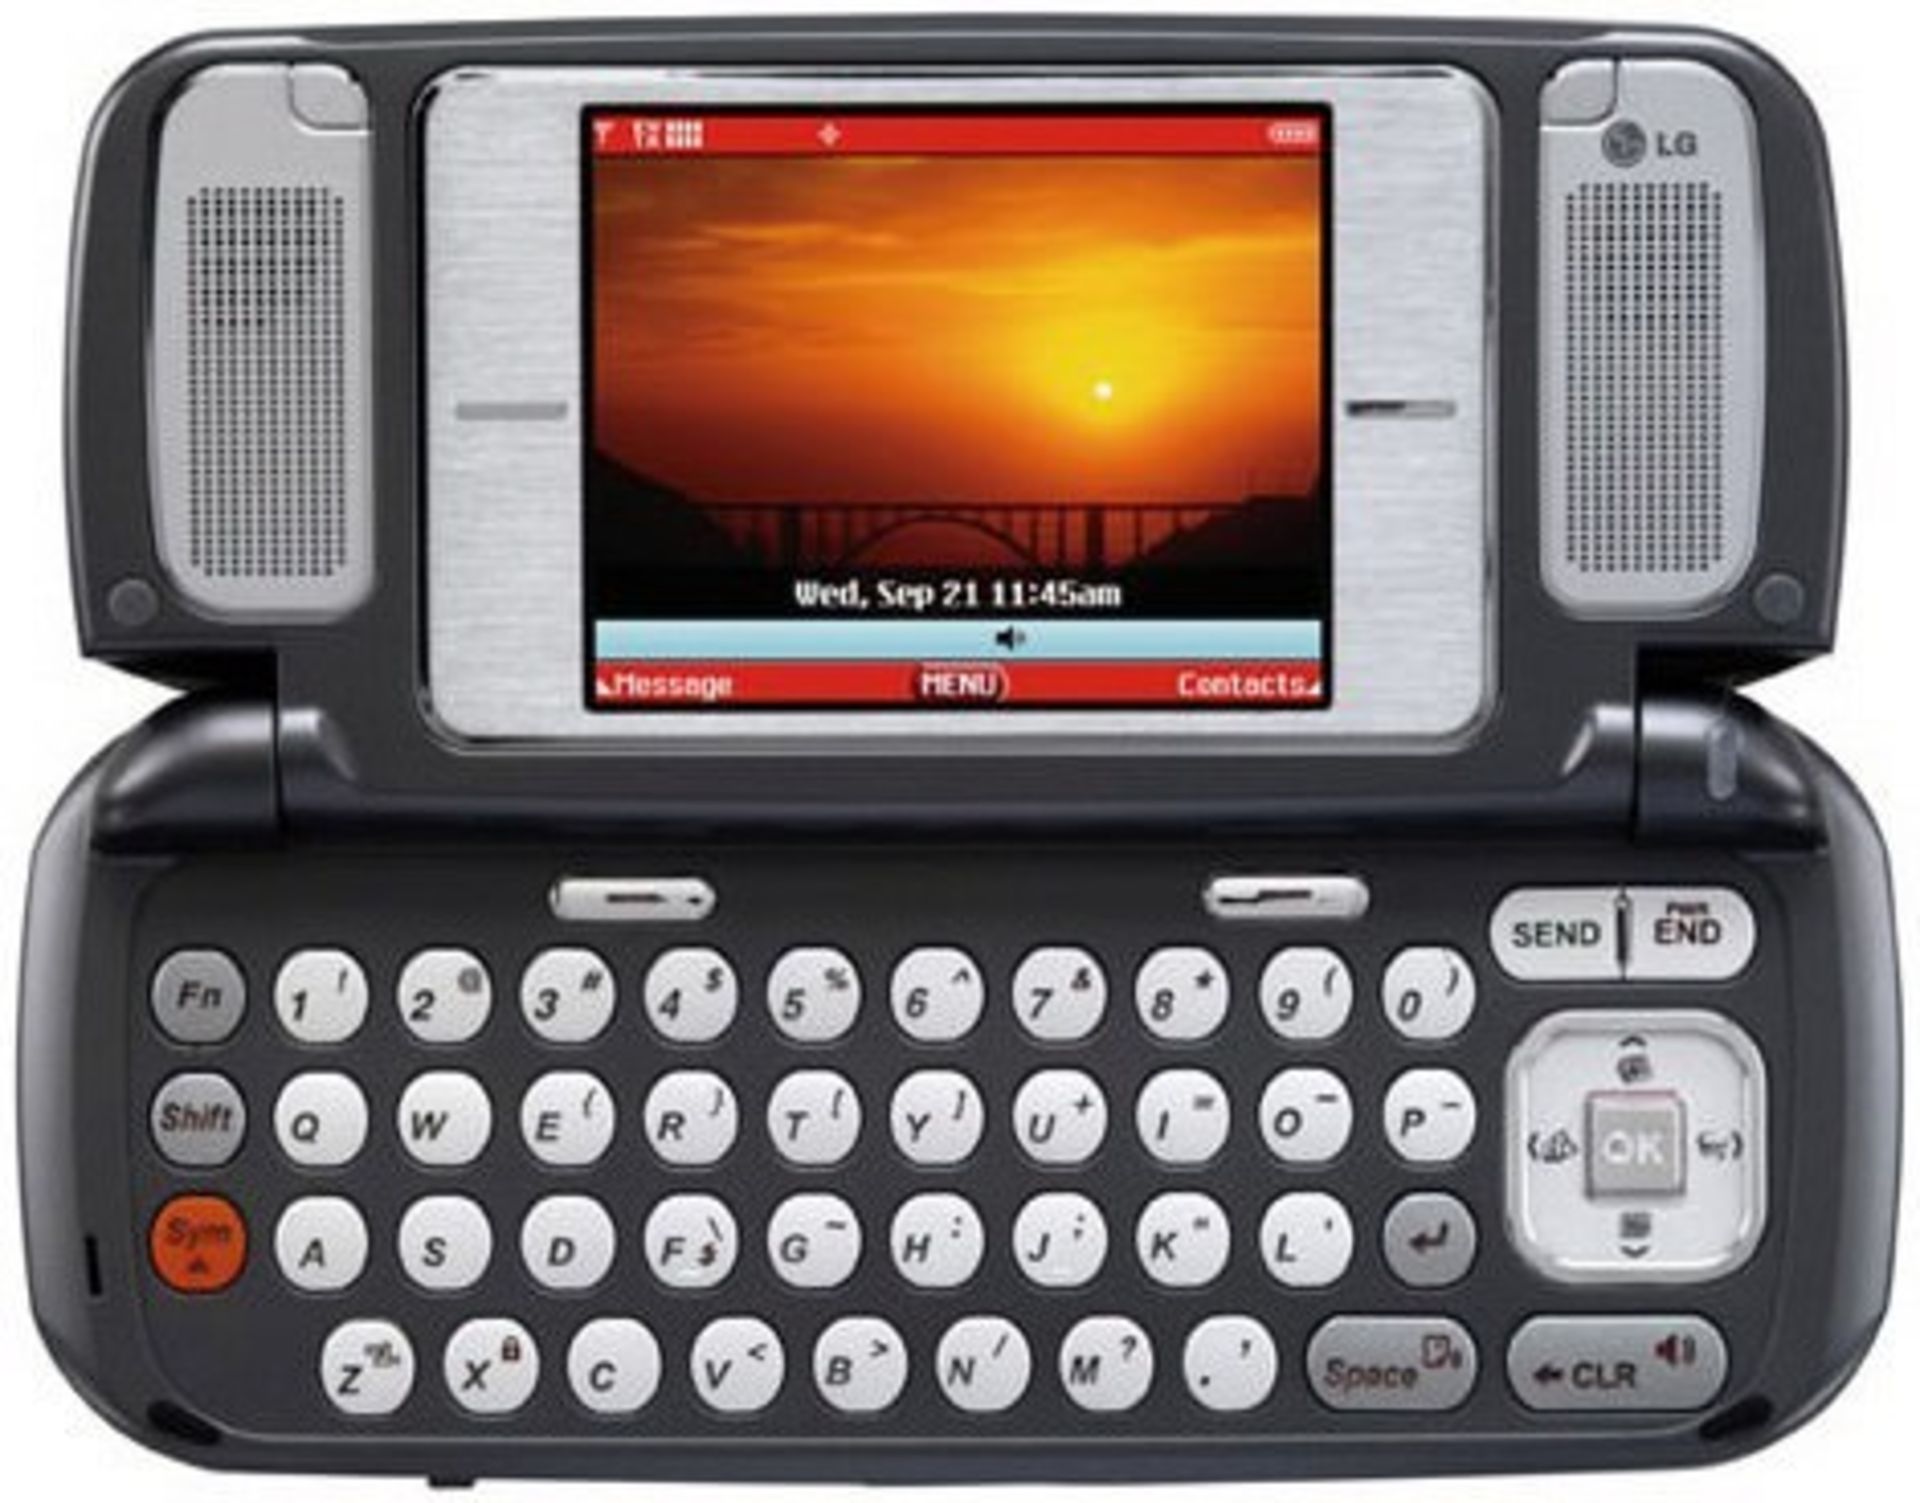 The LG VX 9800